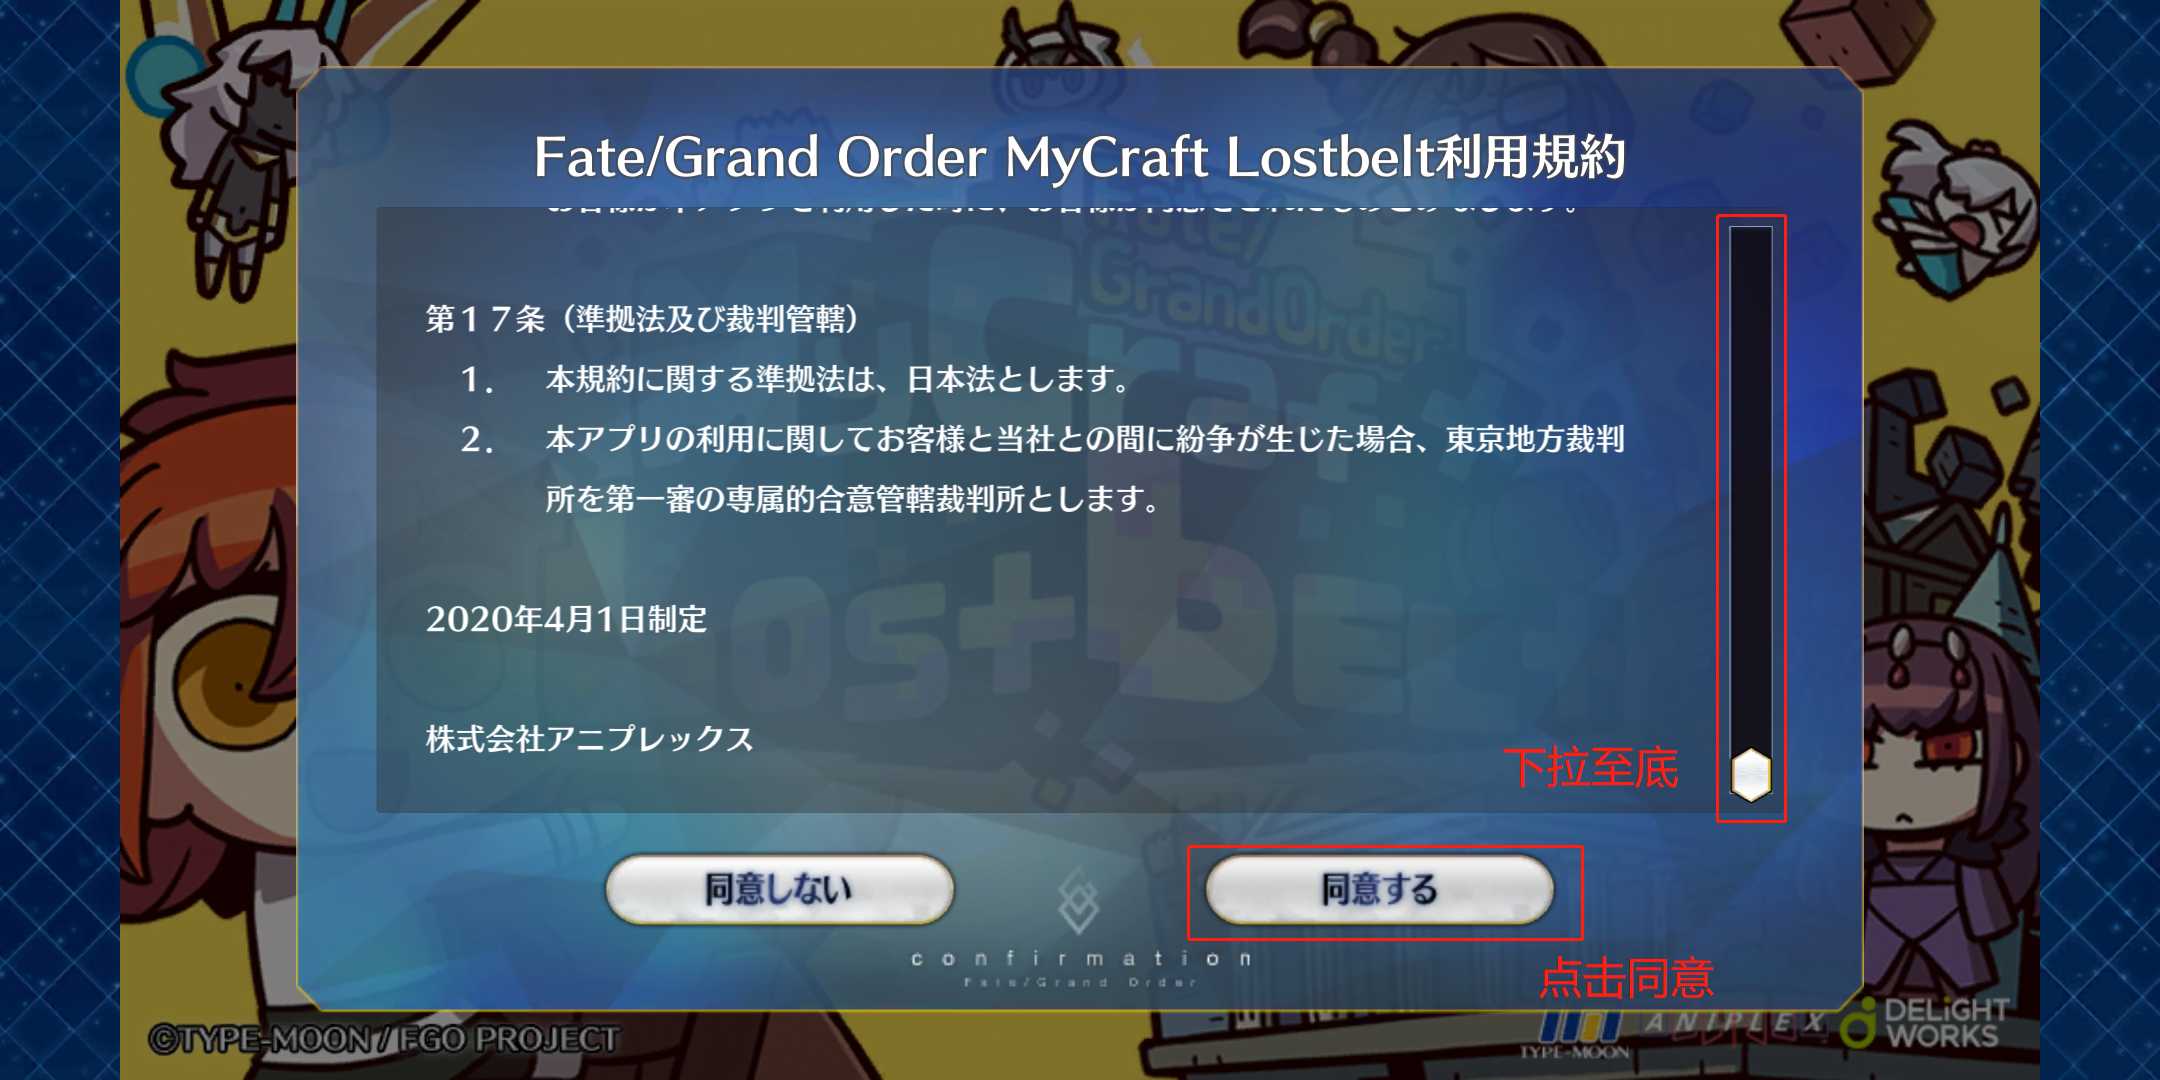 《Fate/Grand Order 我的异闻带》下载及加速攻略